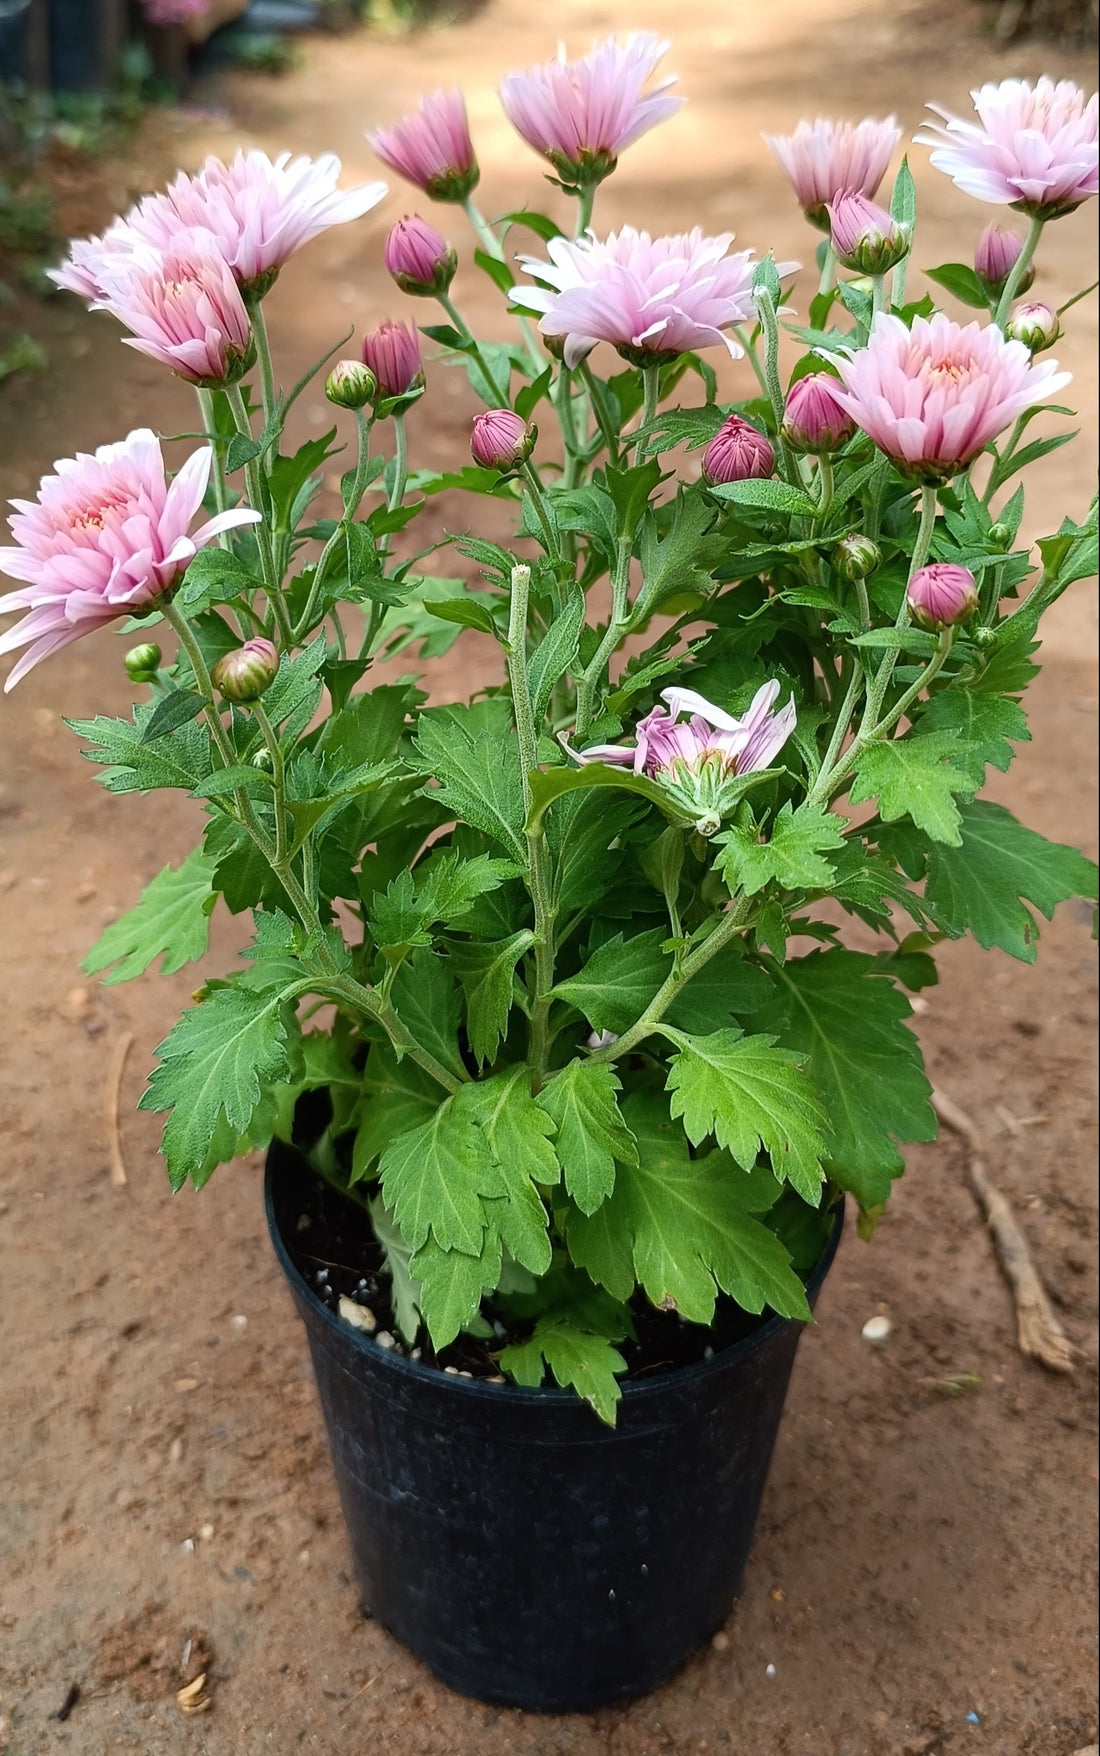 Dwarf Light Pink Chrysanthemum Flowering Live Plant - Pot with Flowers